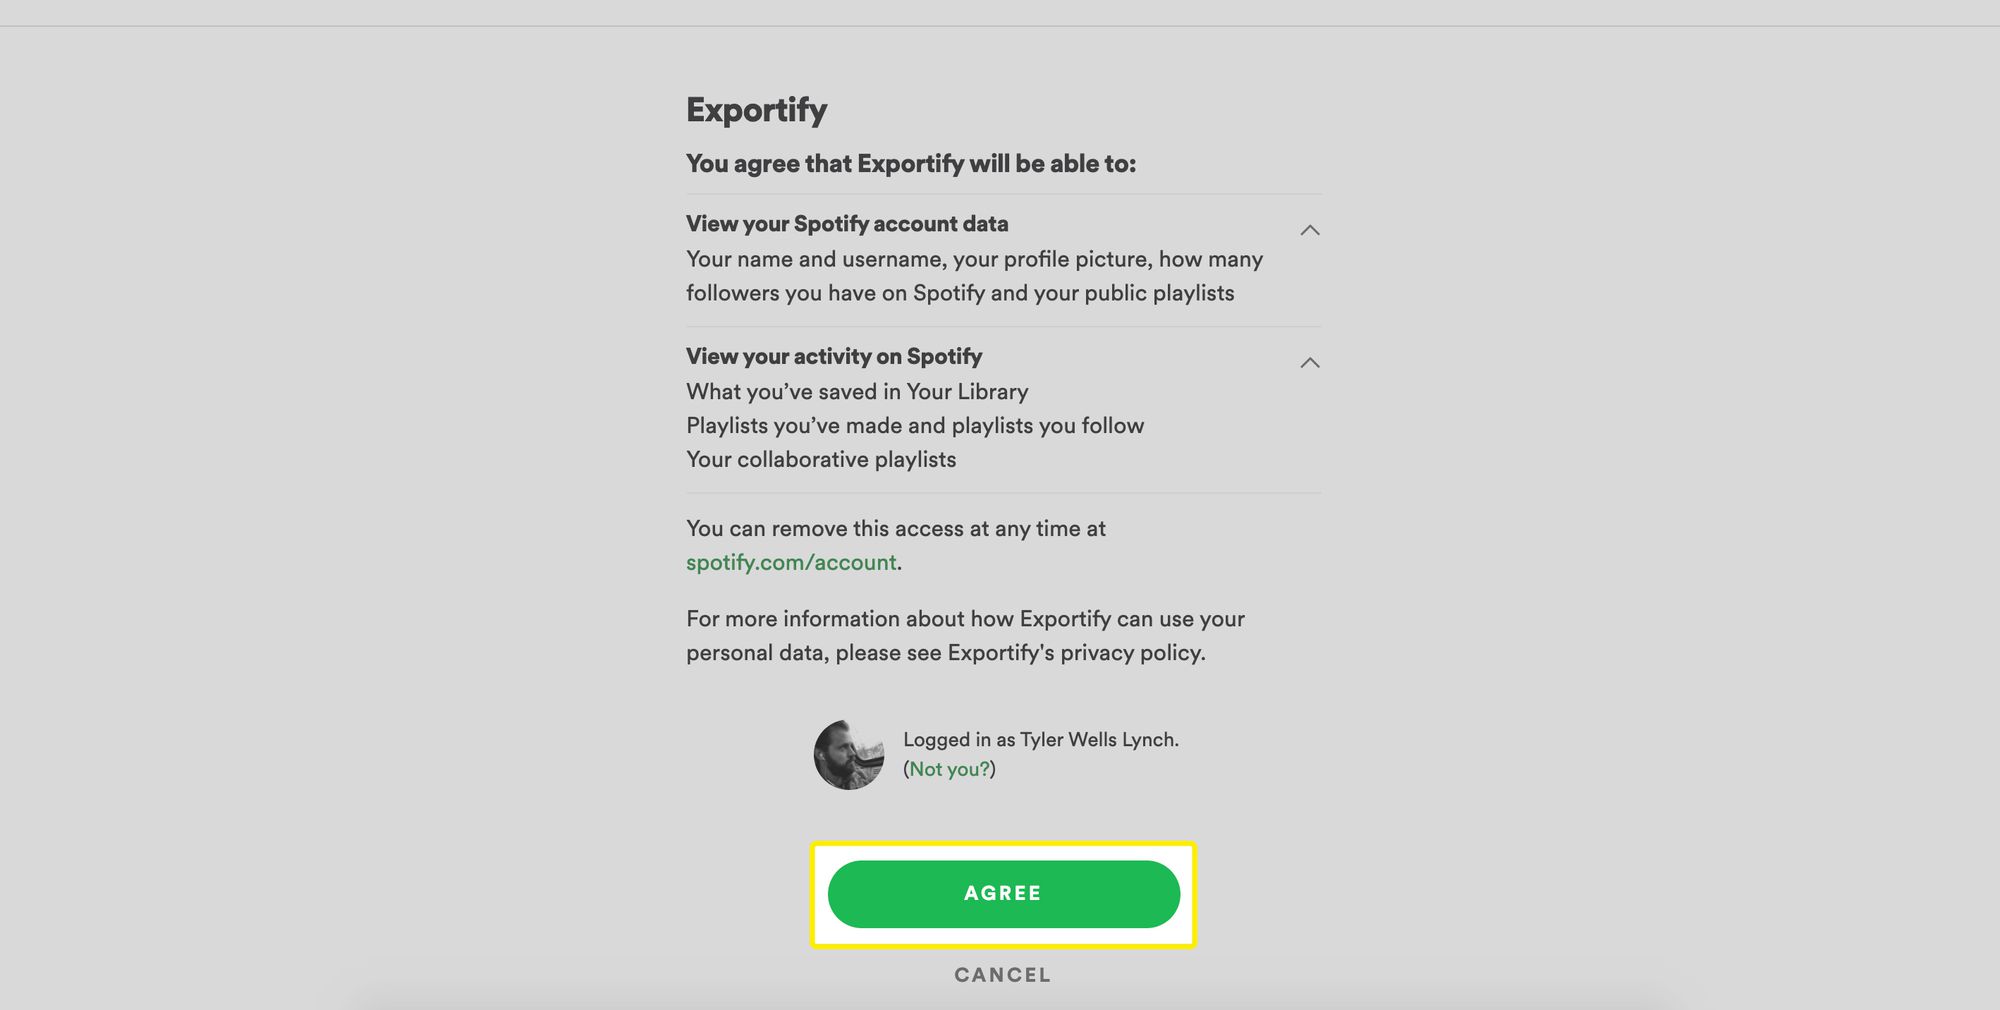 Spotify exportify akkoord voorwaarden